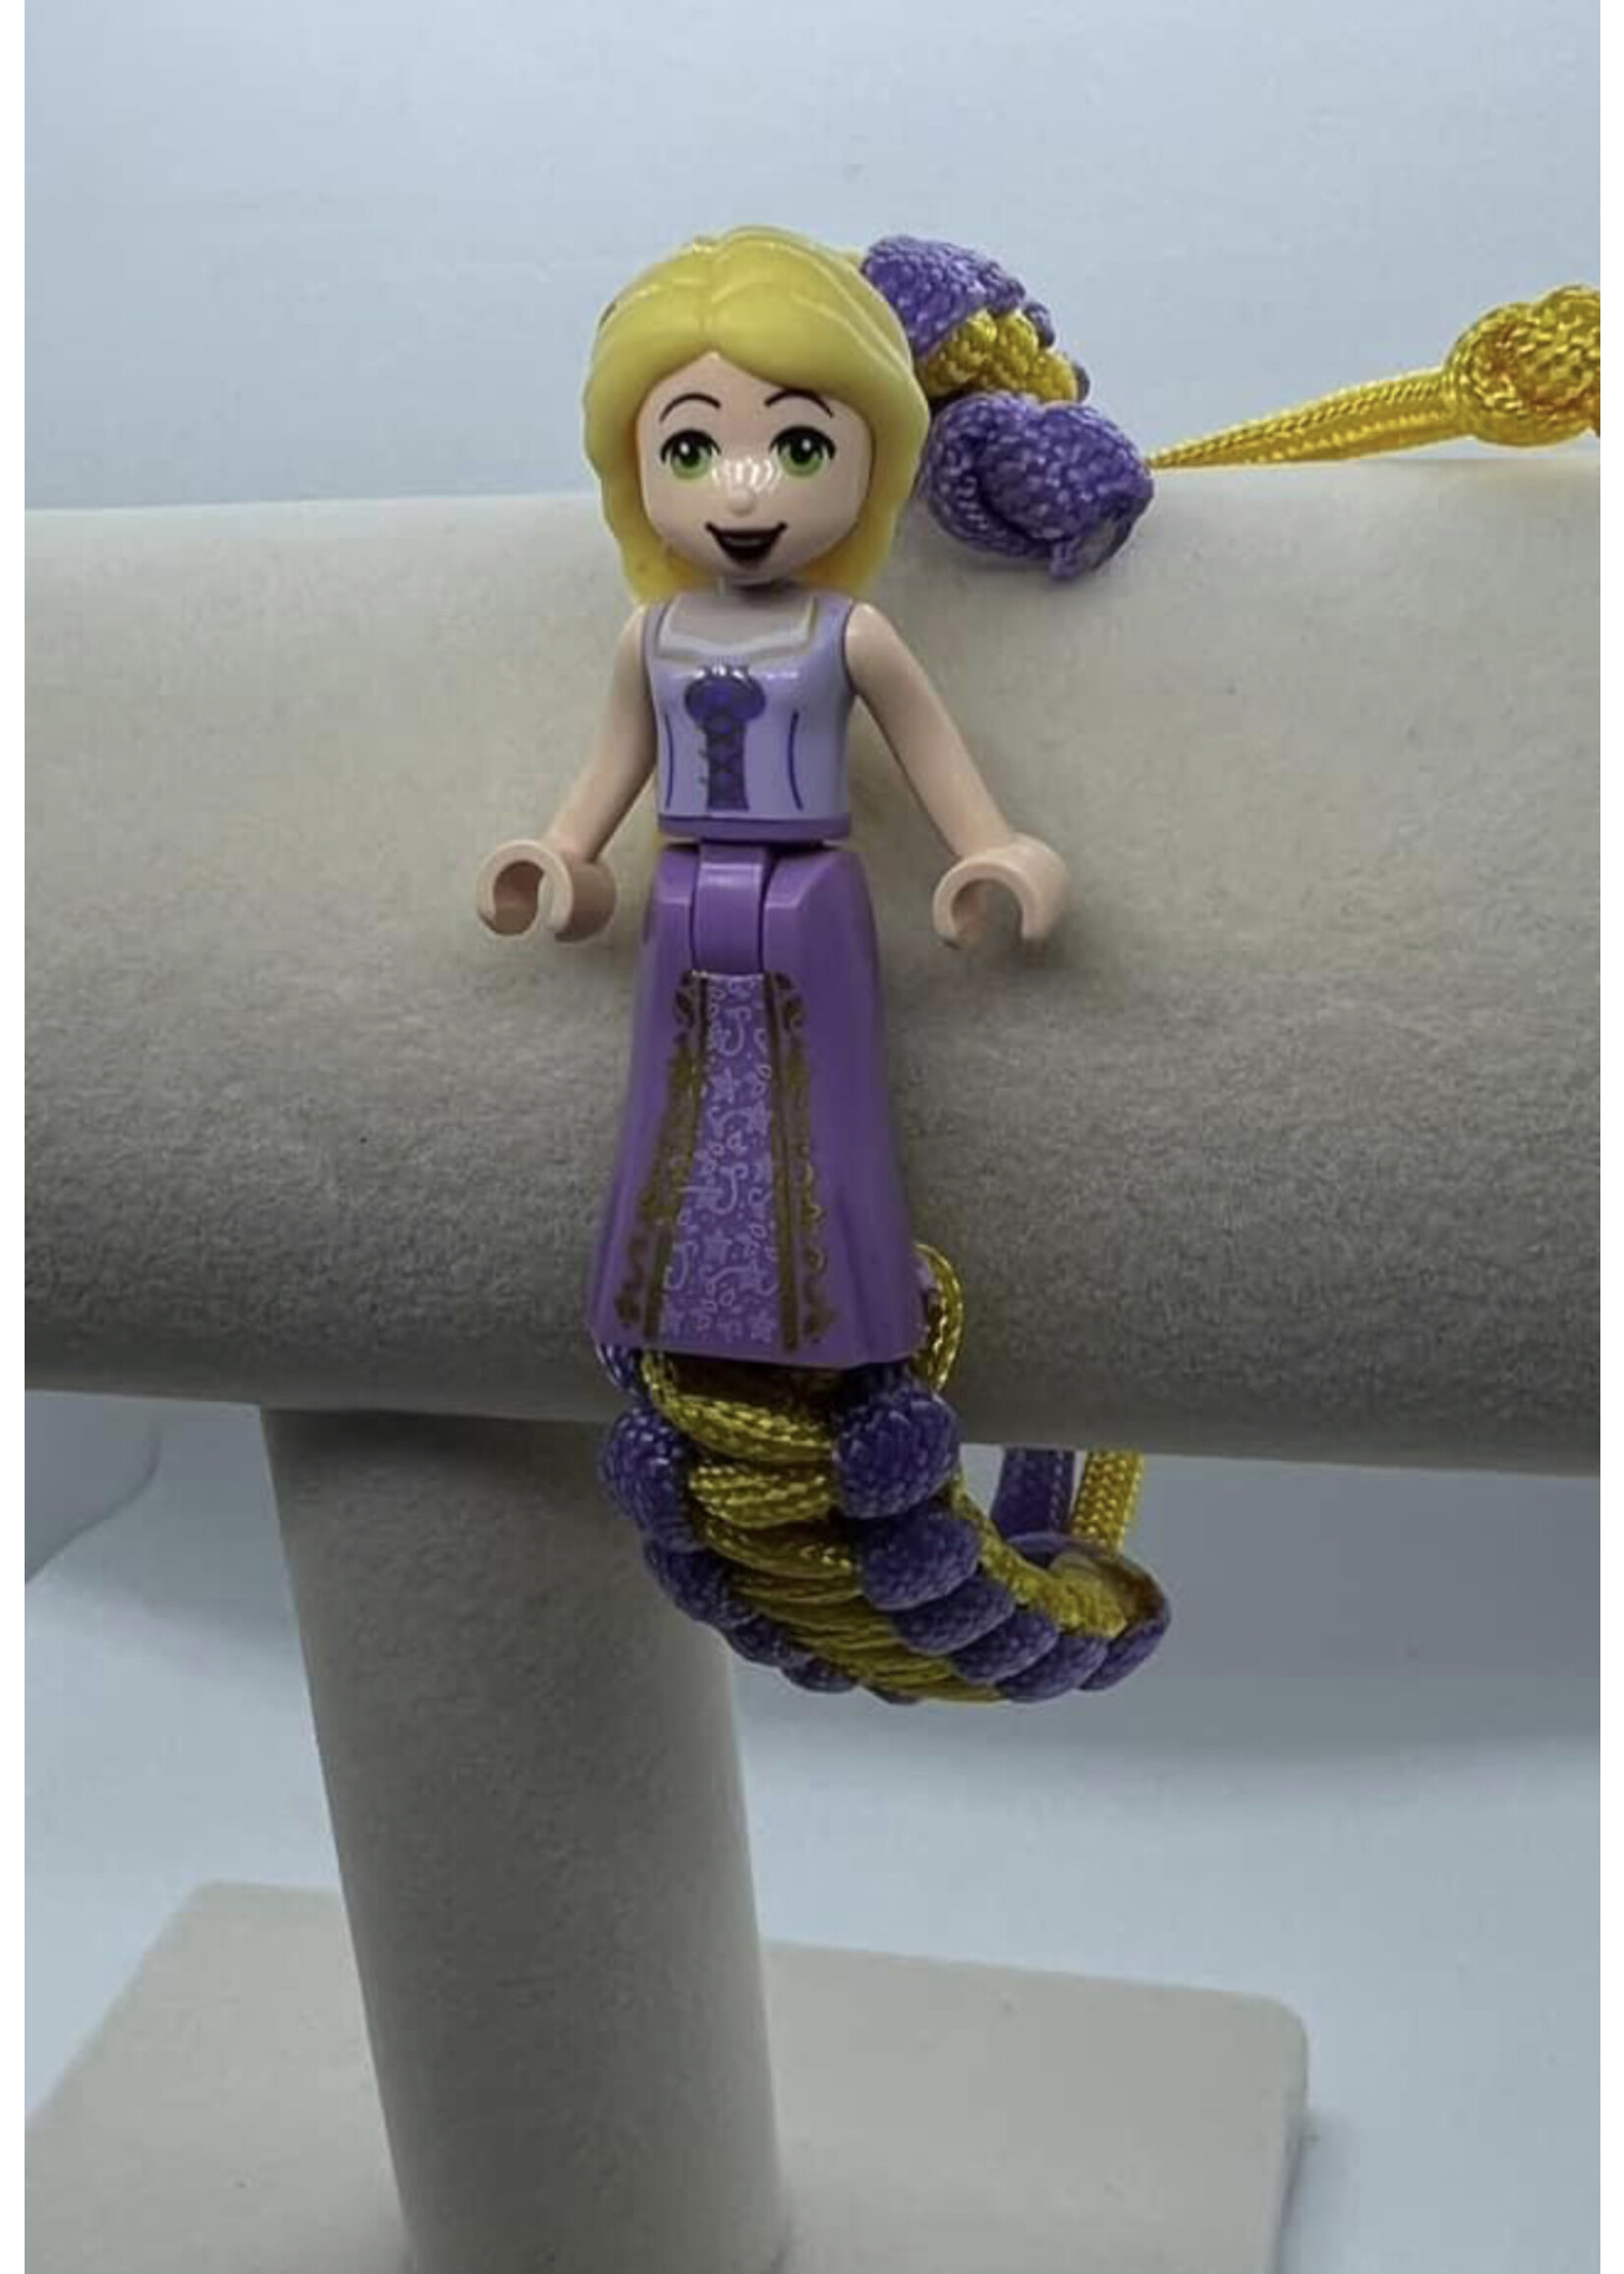 Lego Bracelets - Princesses